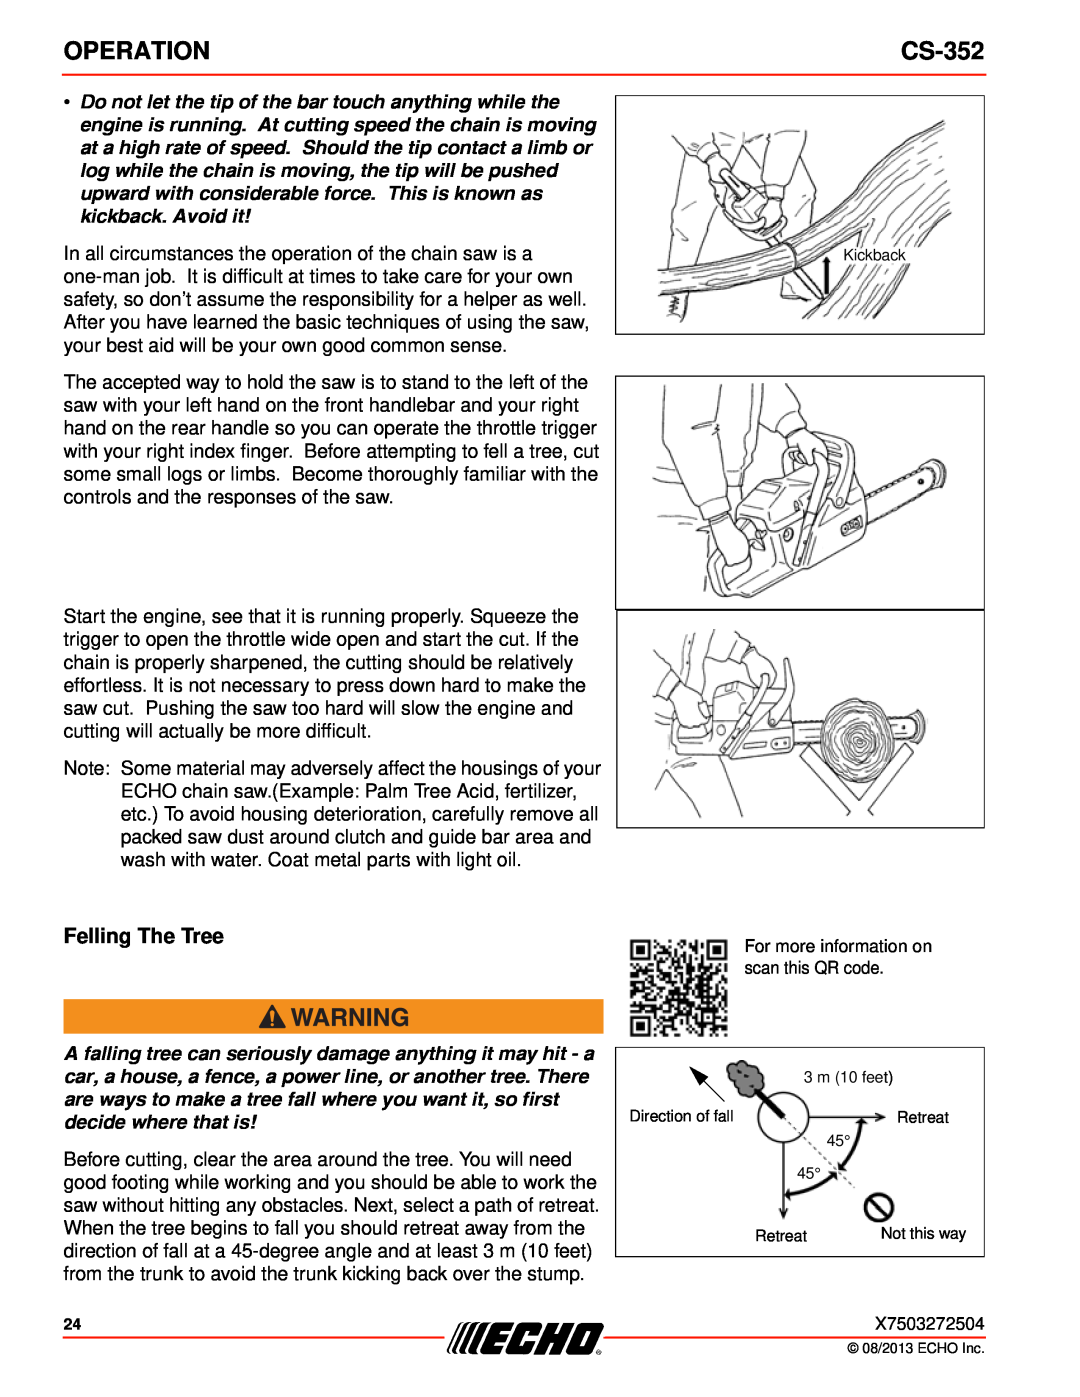 Echo CS-352 instruction manual Felling The Tree, Operation, Kickback, 3 m 10 feet, Direction of fall, Retreat 